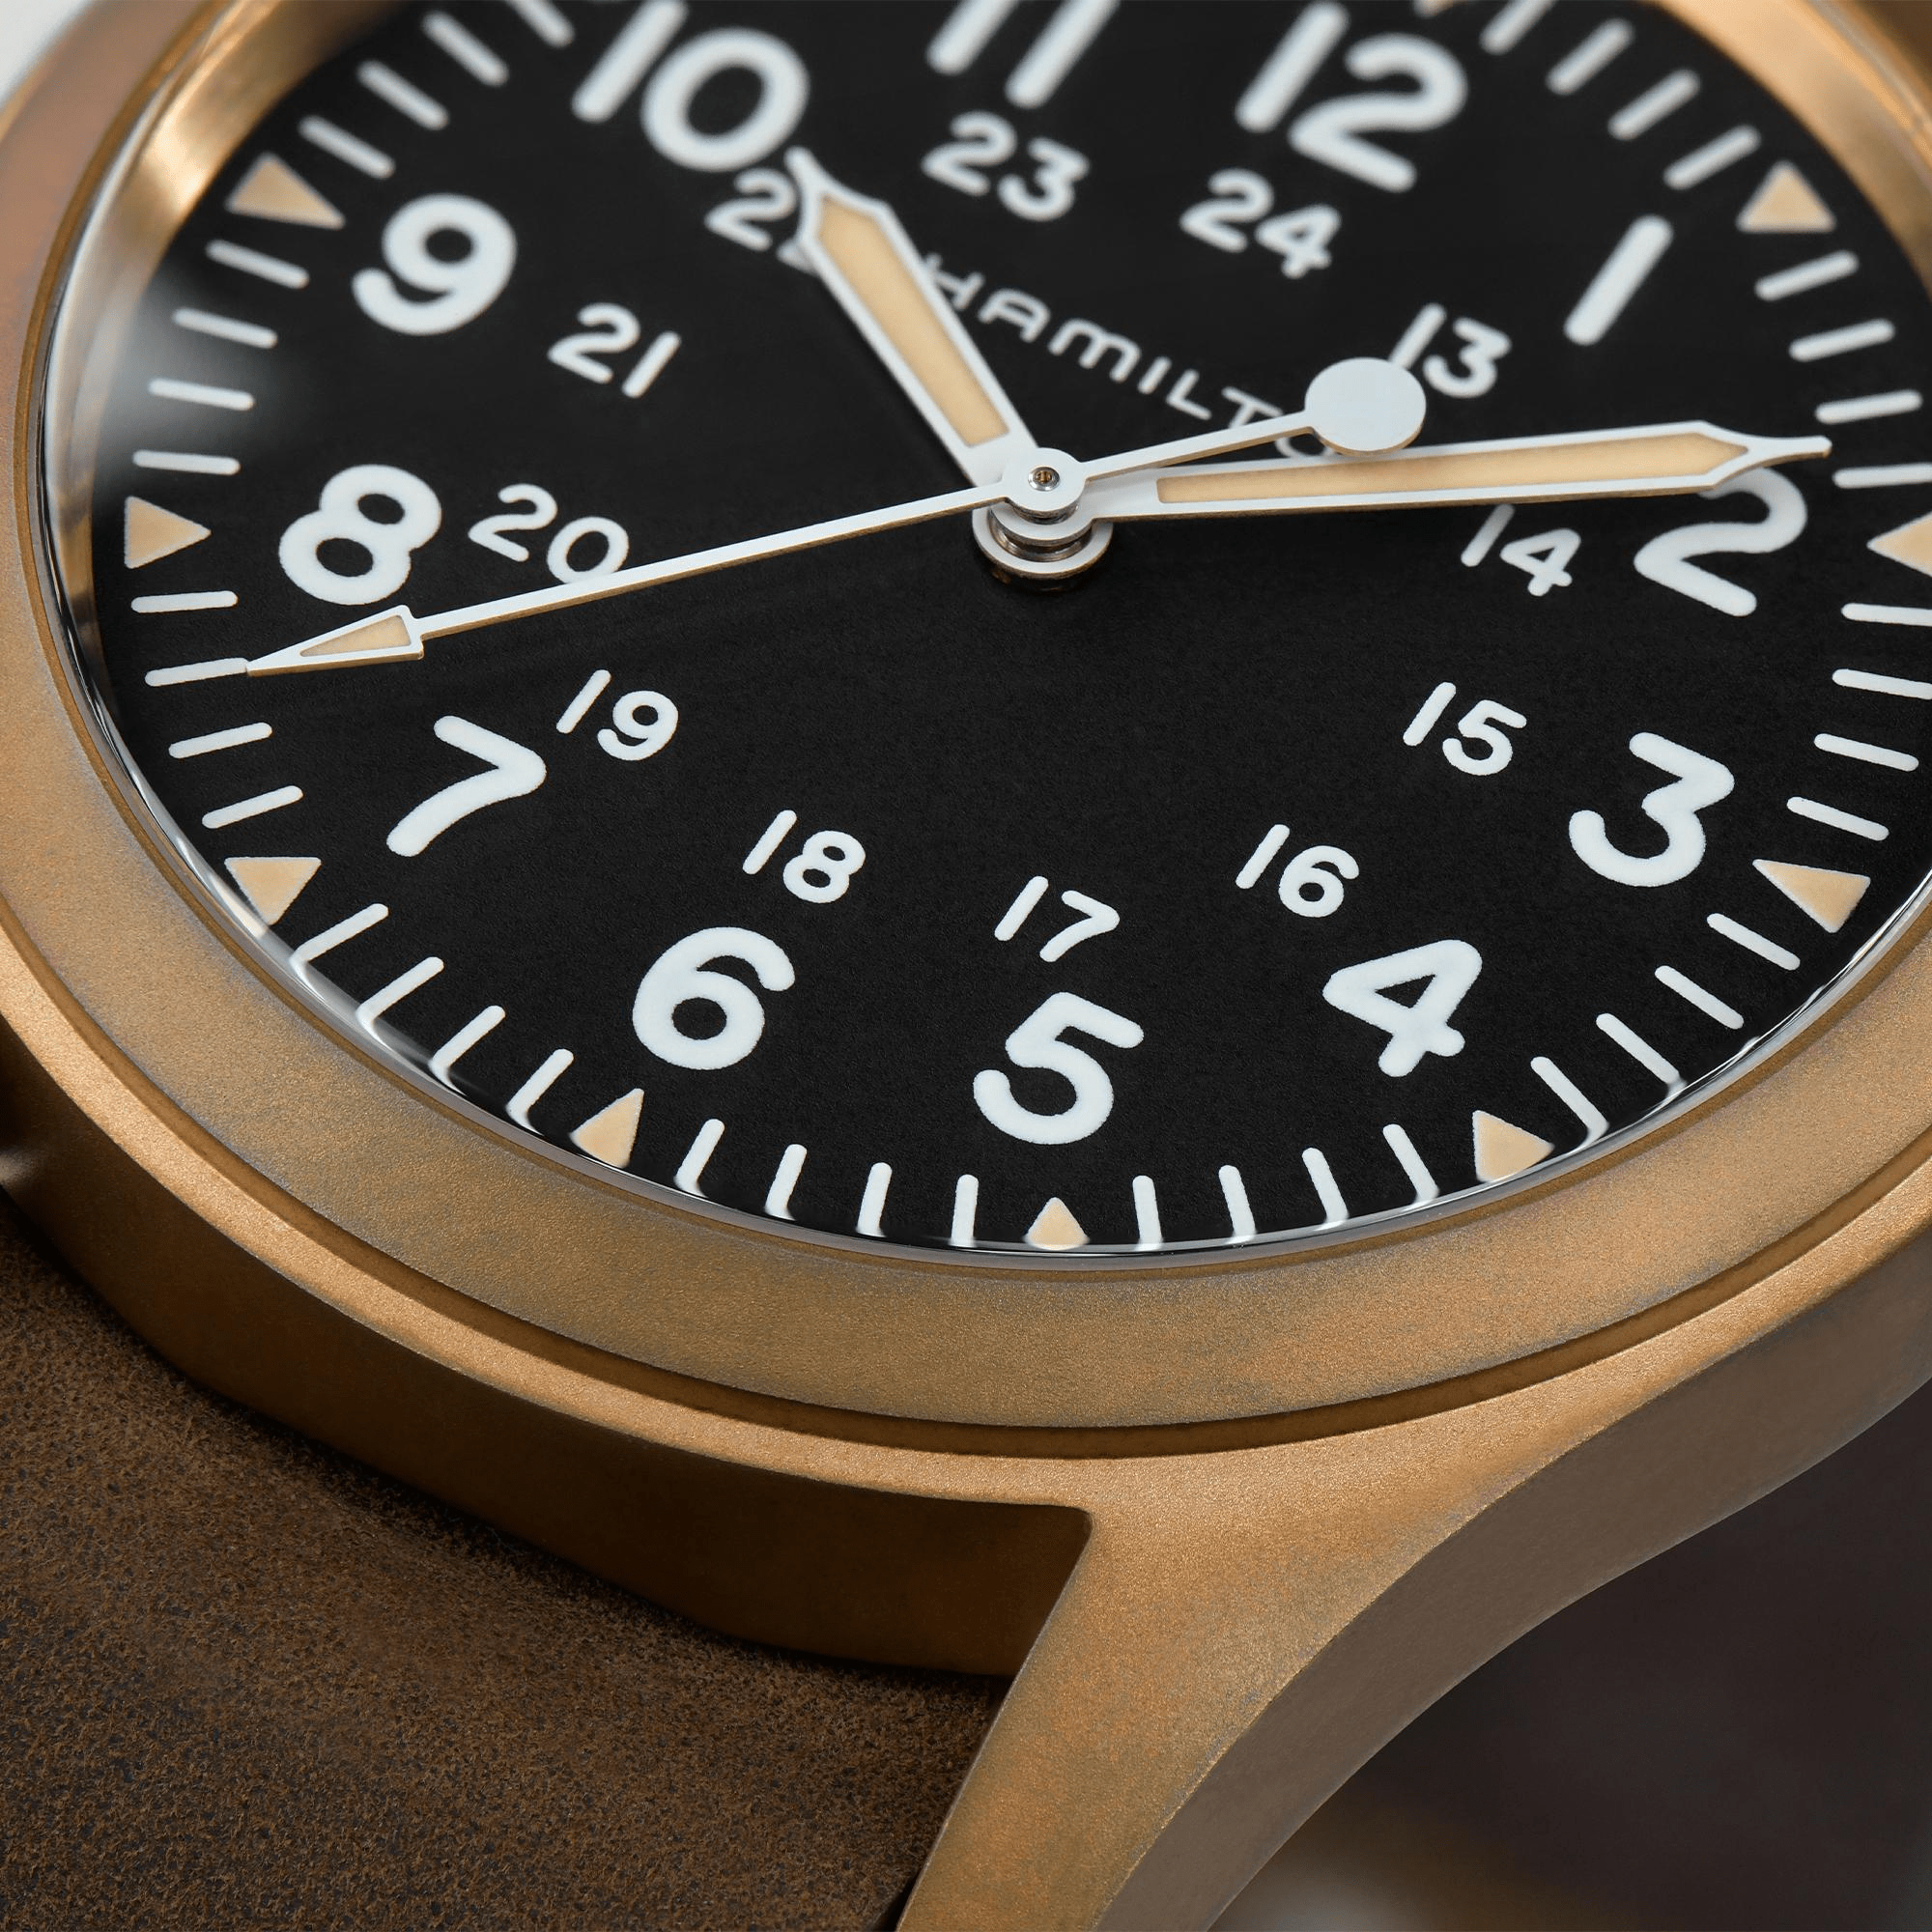 Hamilton Khaki Field Mechanical Bronze Case Men's Watch H69459530